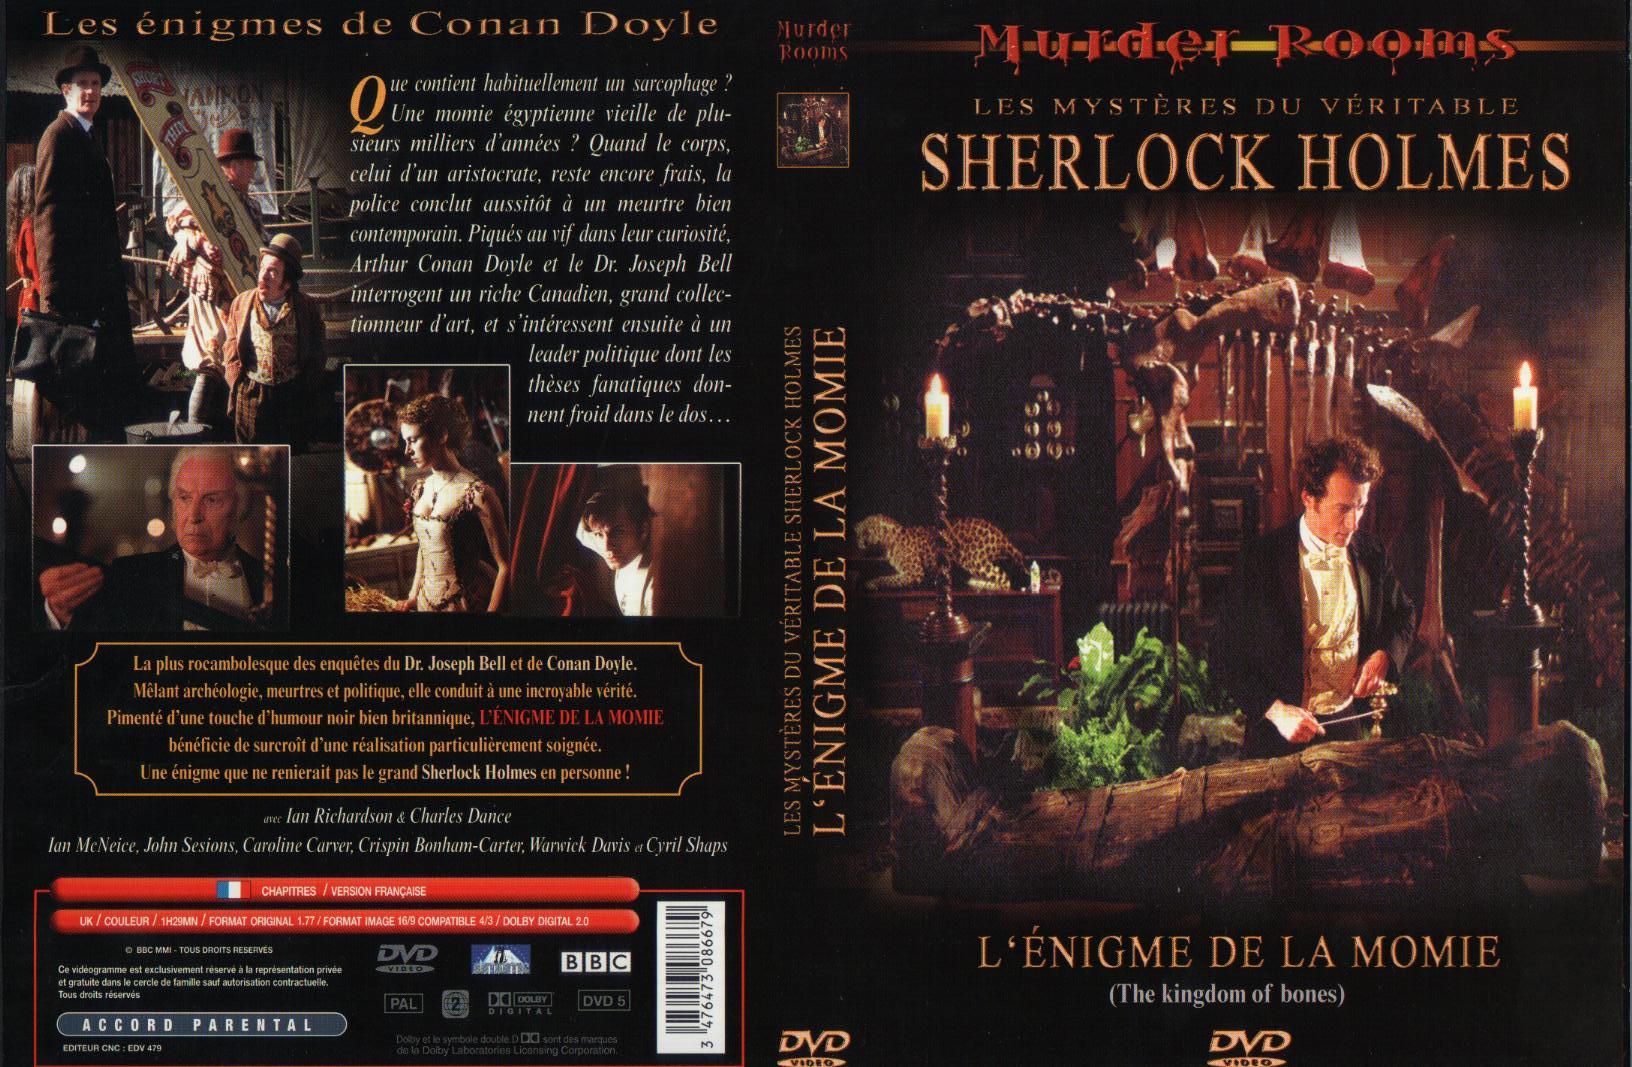 Jaquette DVD Sherlock Holmes - L